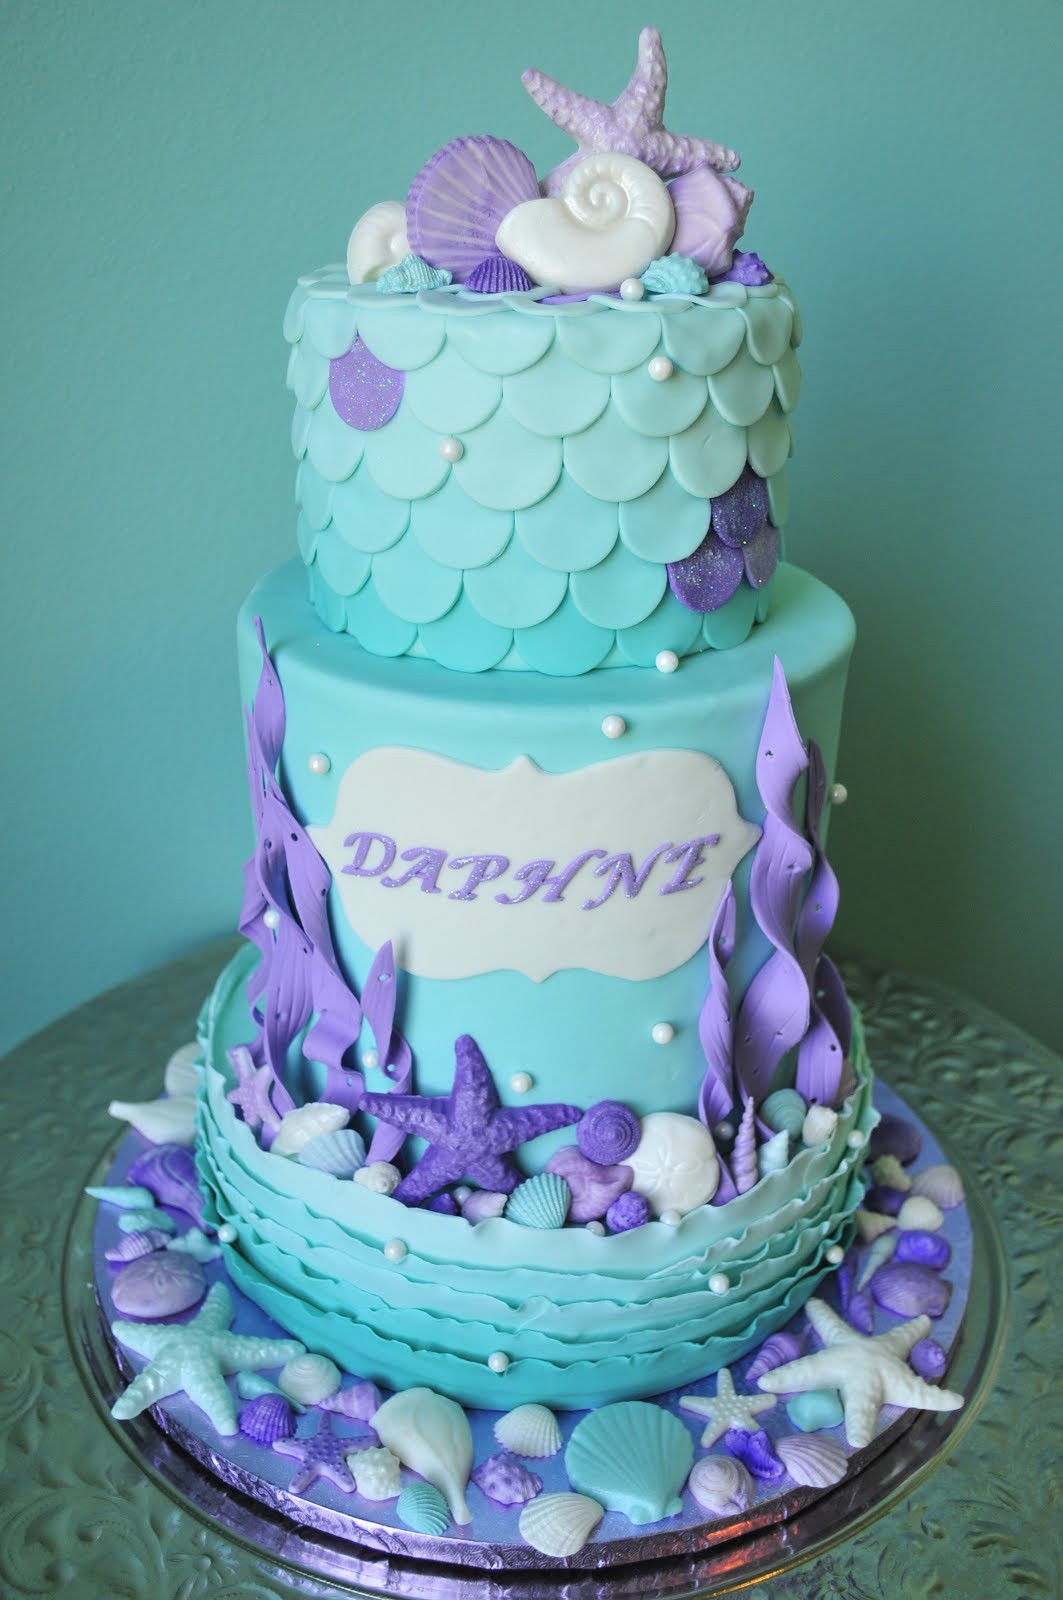 Personalized Birthday Cakes
 Lindsay s Custom Cakes